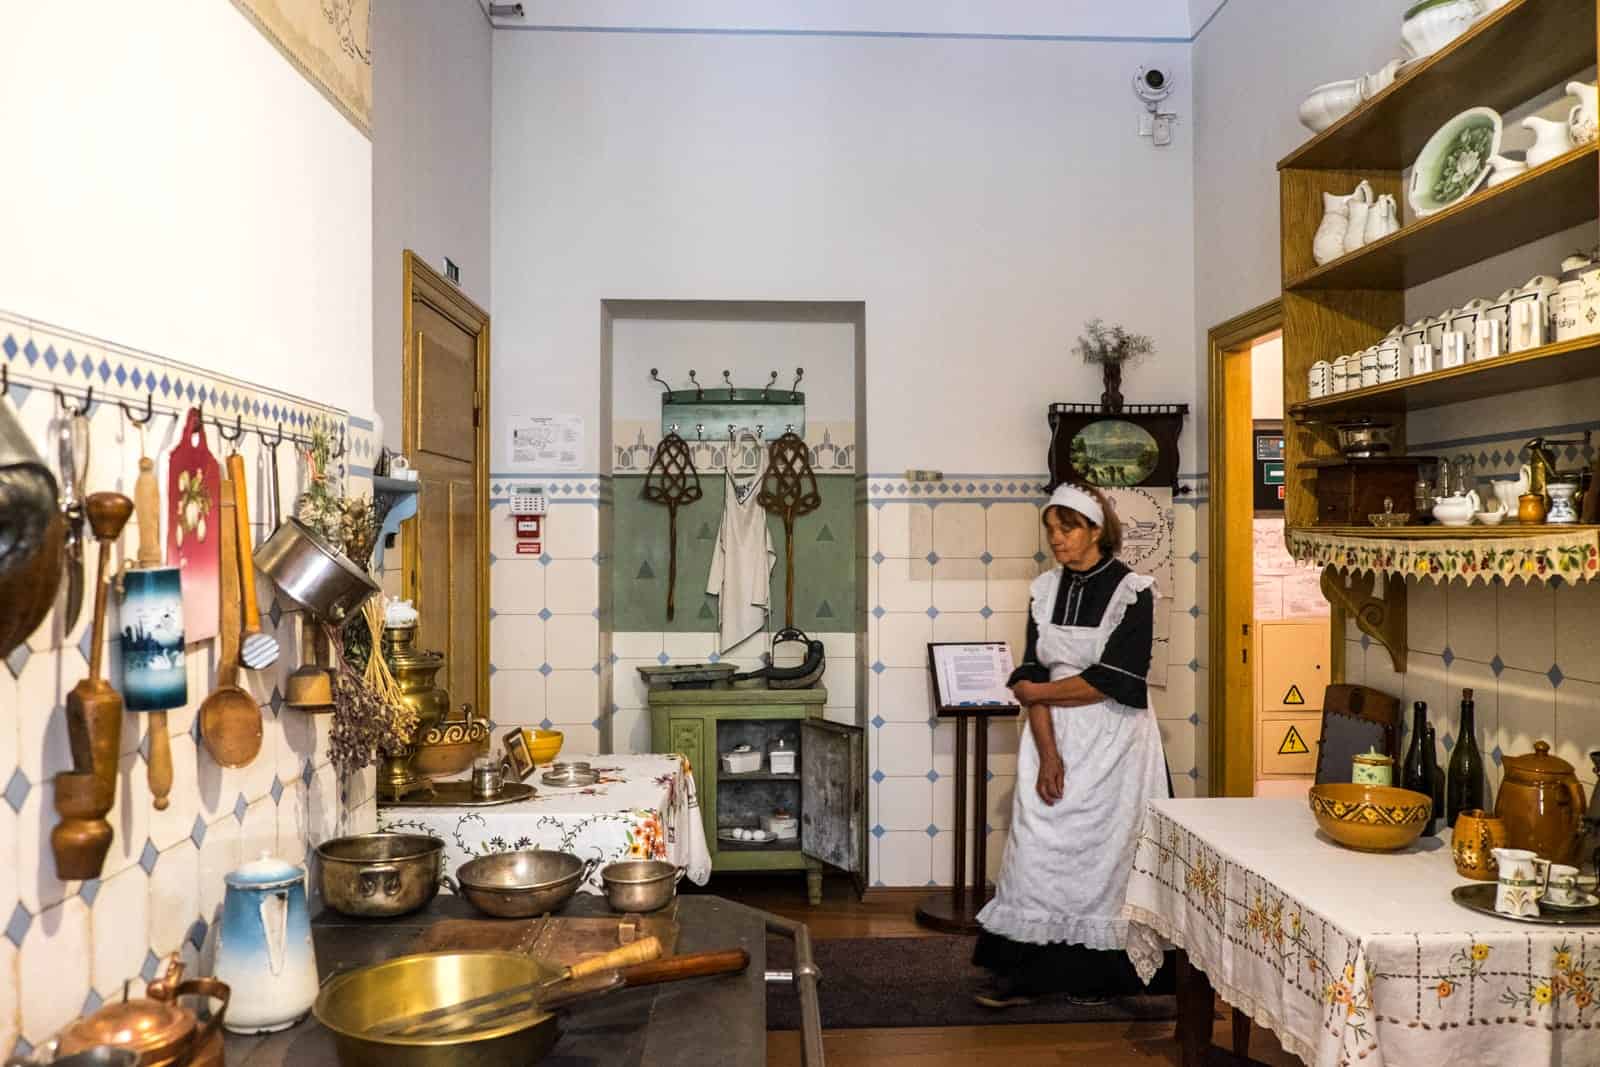 Kitchen inside the Art Nouveau museum in Riga, Latvia